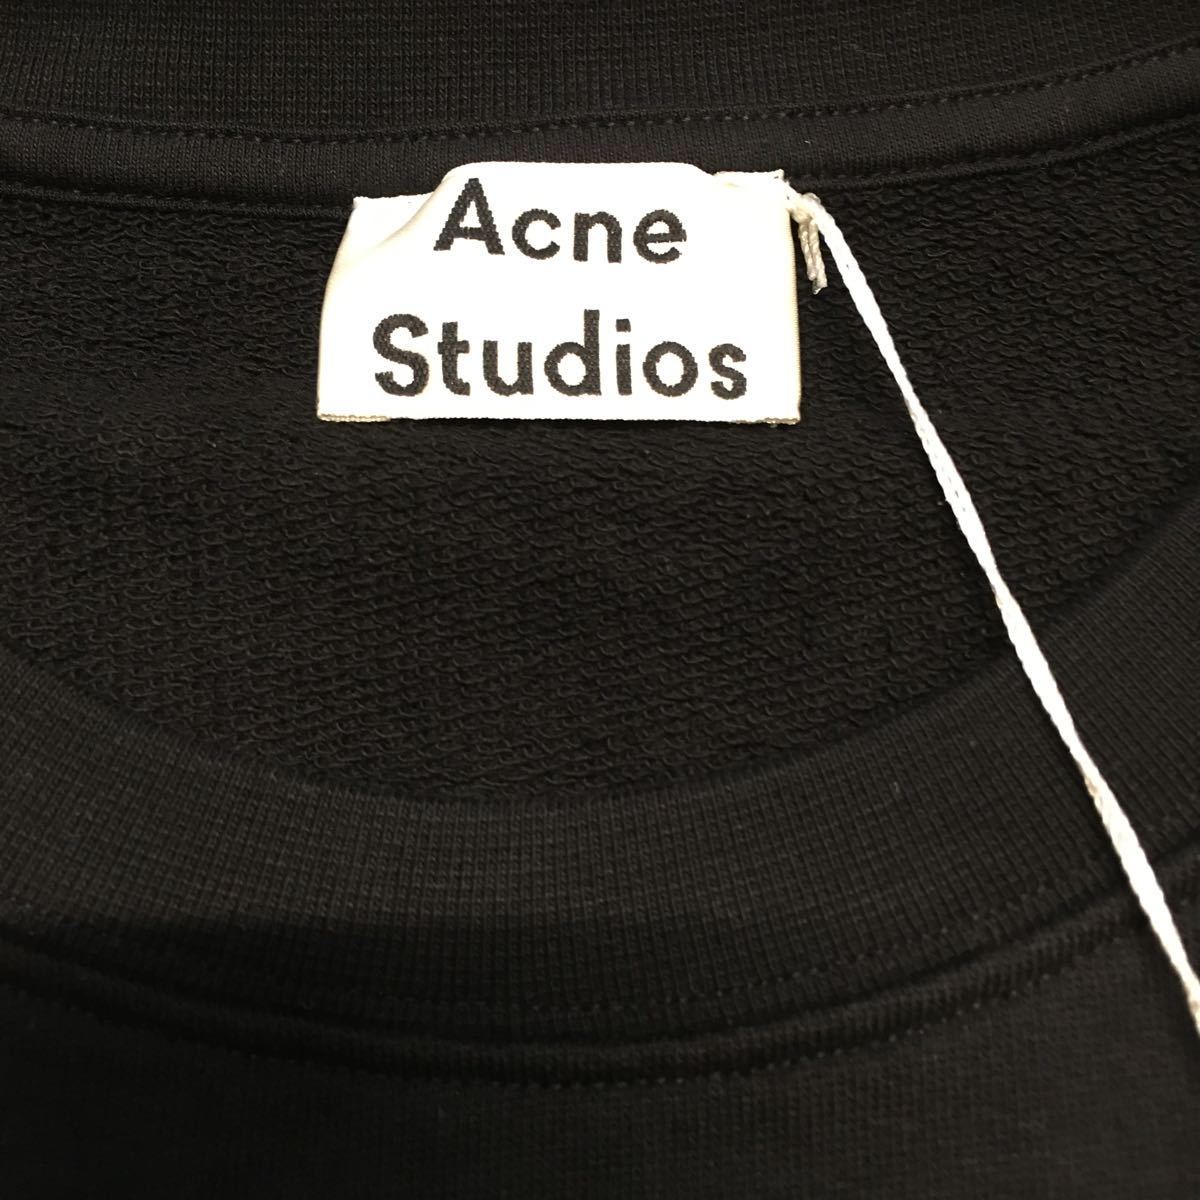  new goods tag attaching! Acne Studios Acne s Today oz both side Zip sweat sweatshirt sweatshirt black size XL rare!